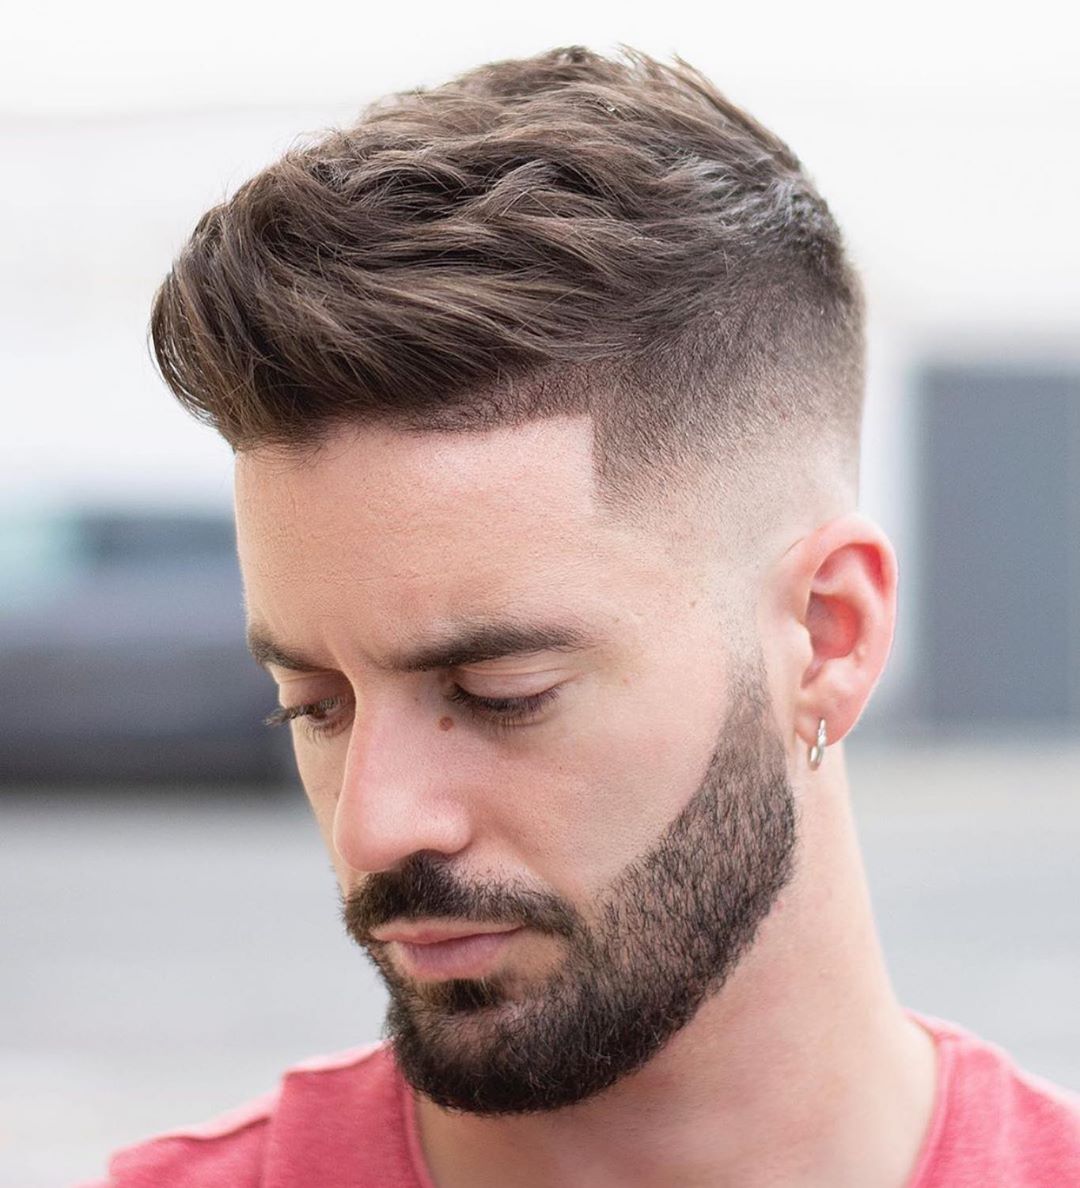 Boys Haircuts New Hair Style 2021 Man - ezildaricci